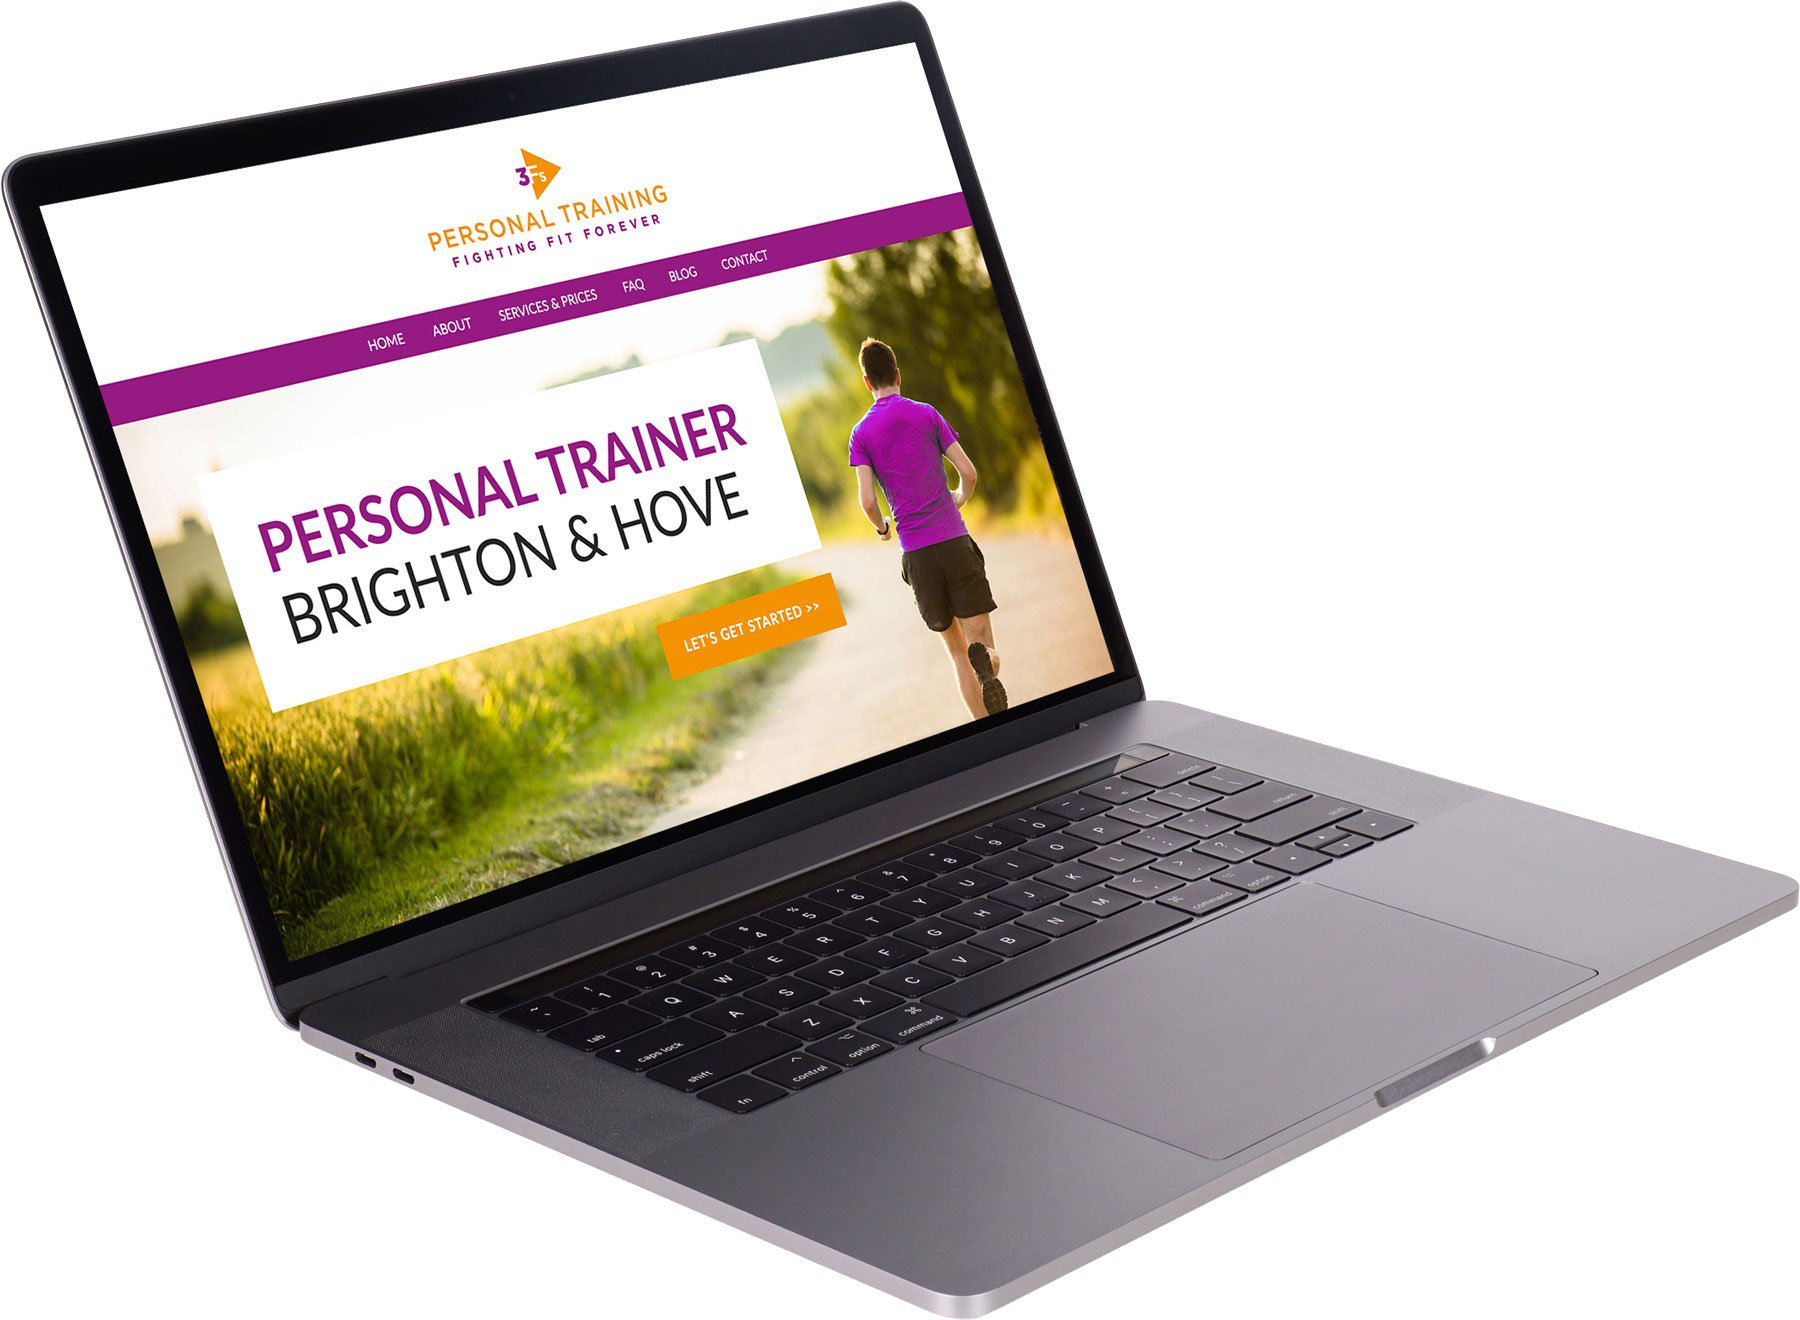 3Fs Personal Training website